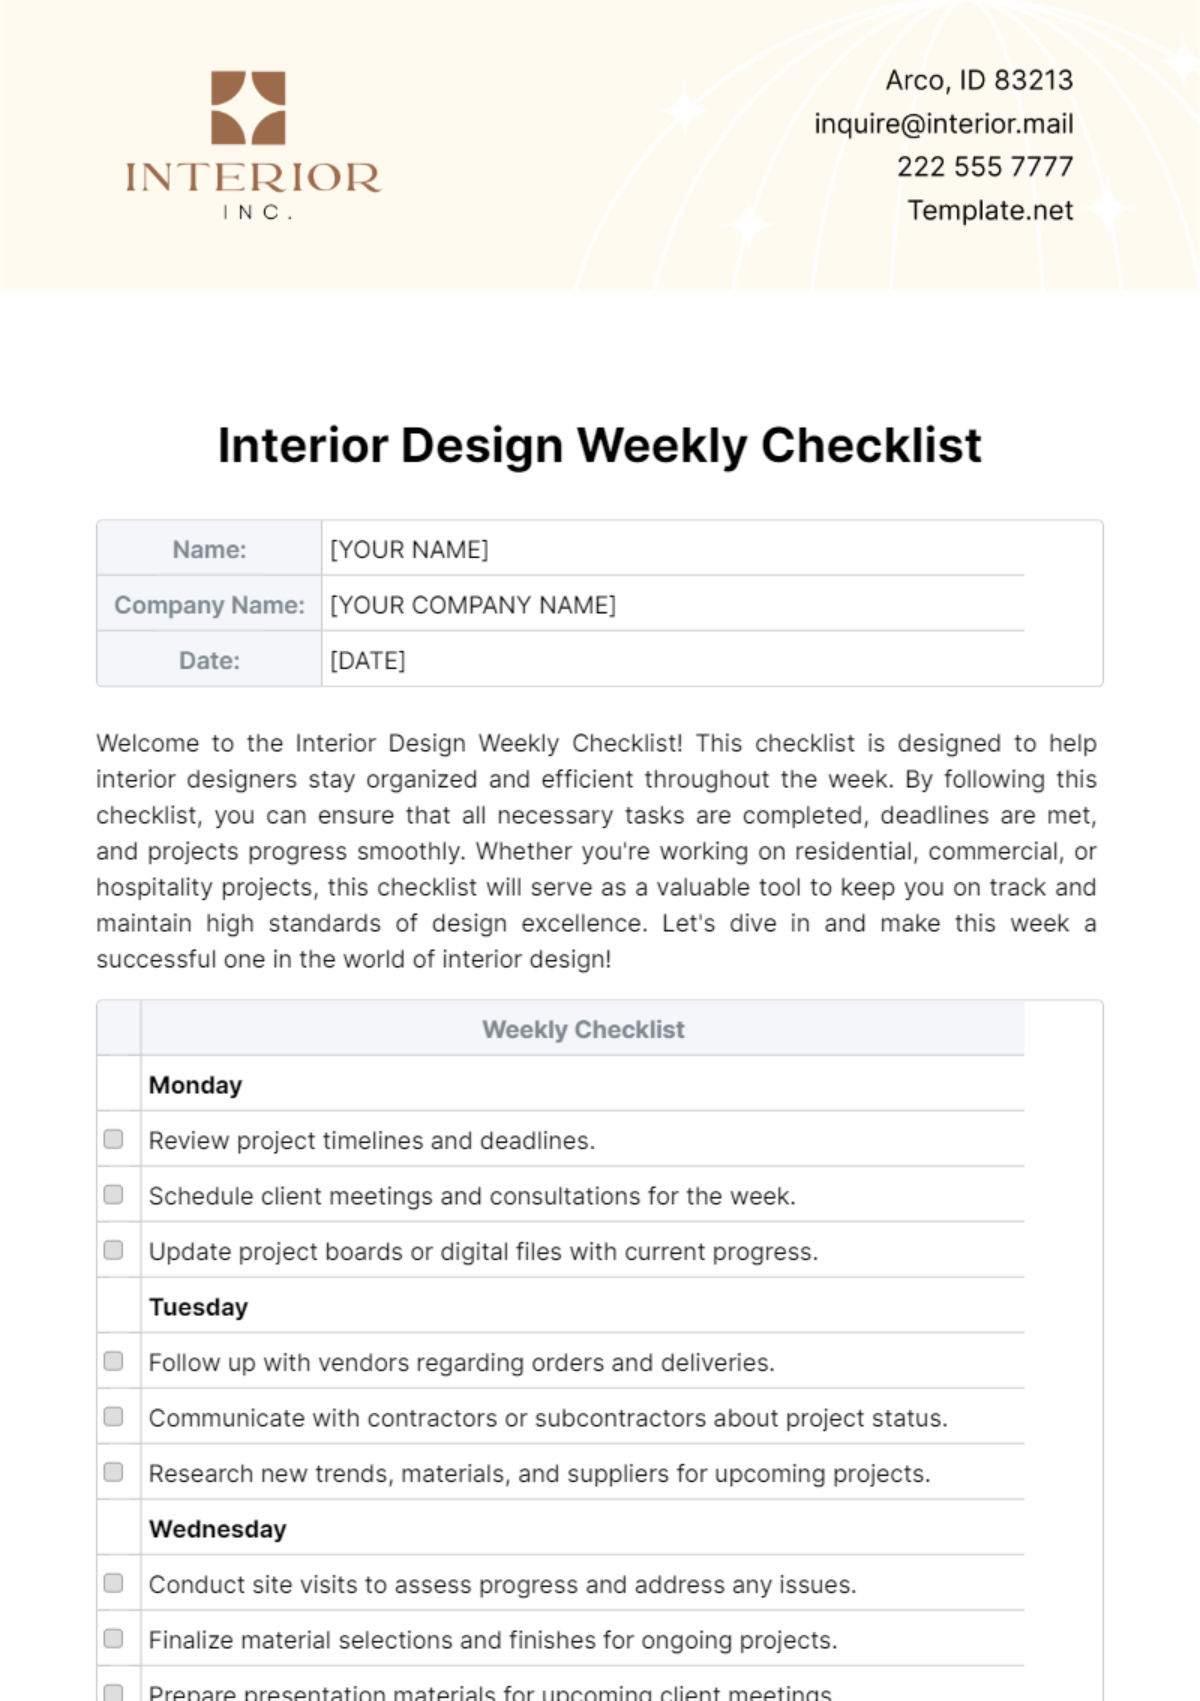 Interior Design Weekly Checklist Template